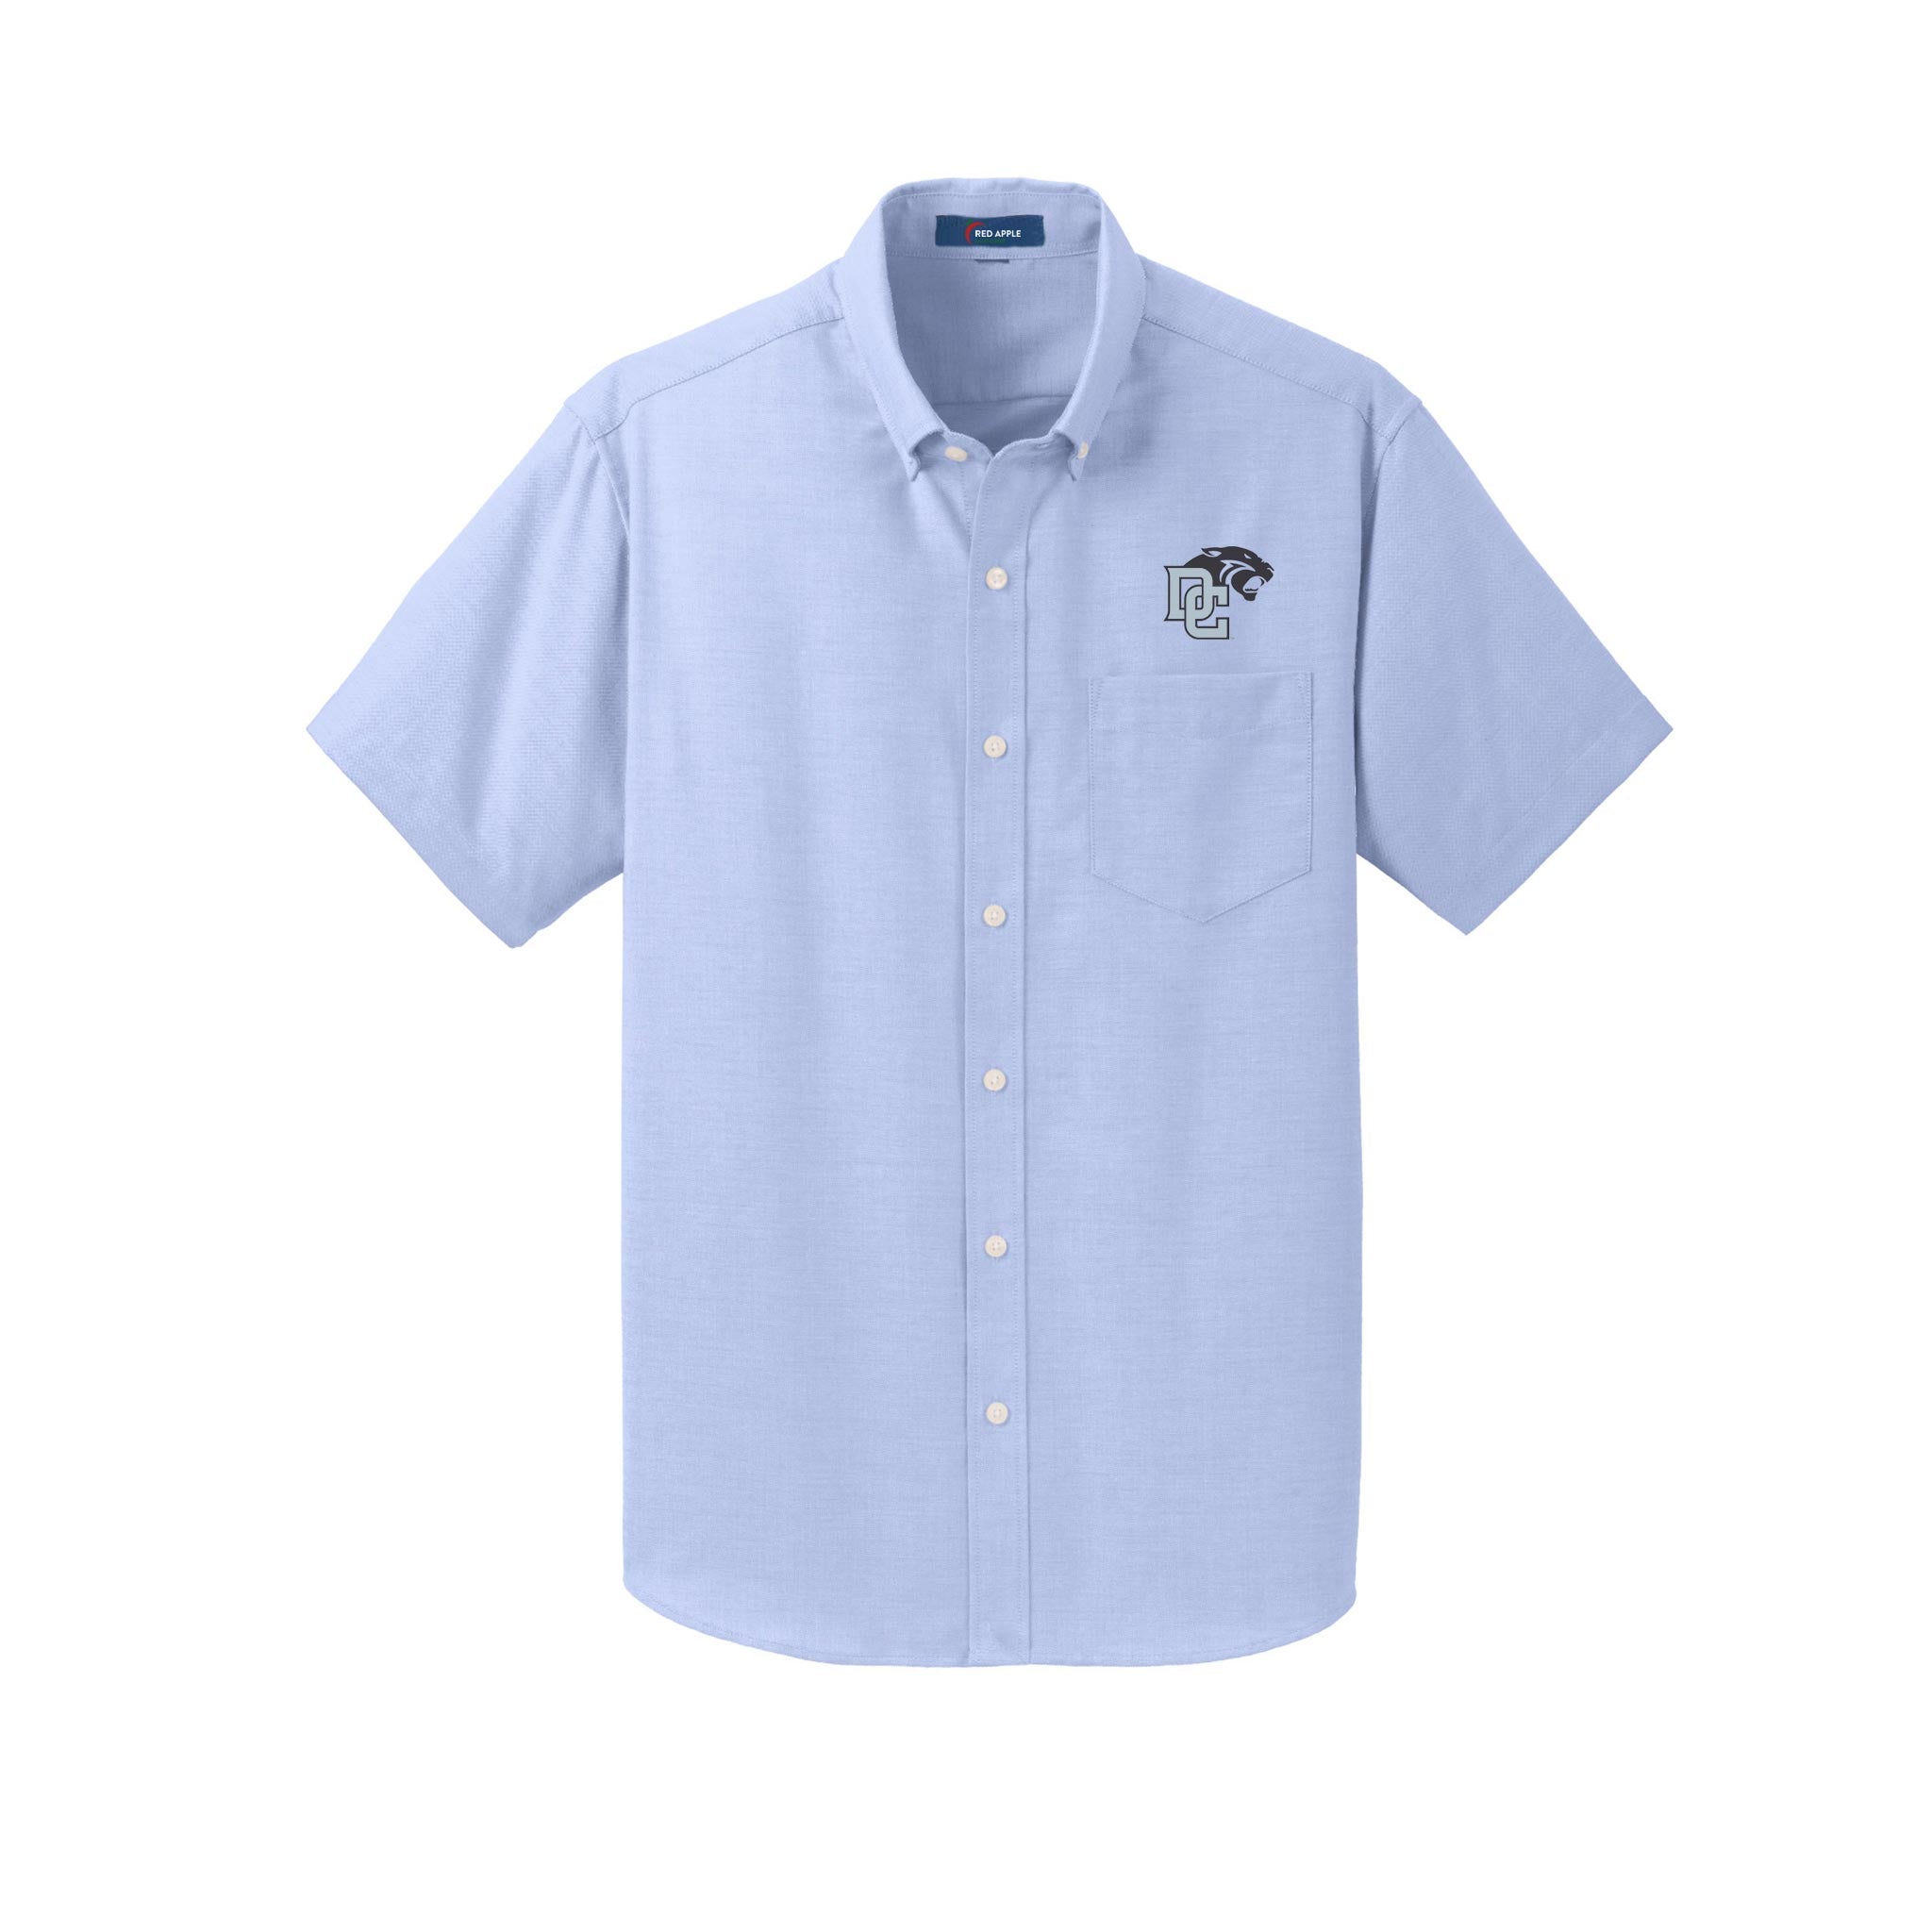 Duval Charter School at Baymeadows (9-12) - Short Sleeve Oxford Shirt